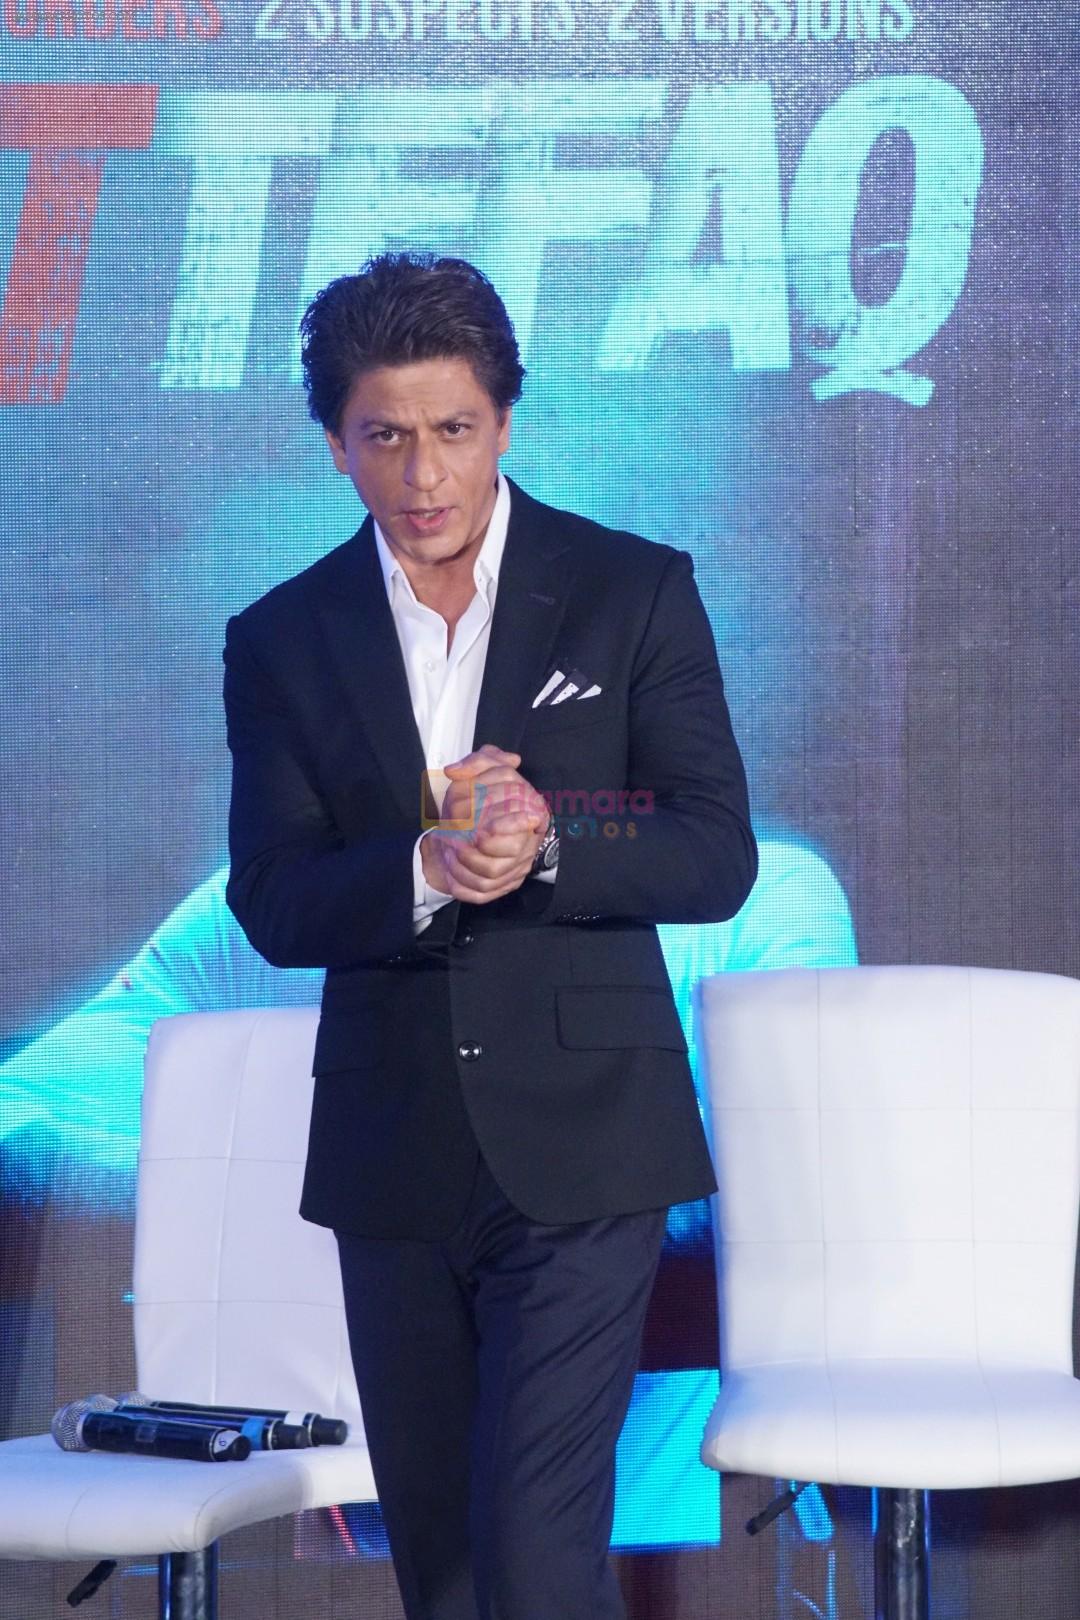 Shah Rukh Khan at the launch of film Ittefaq on 30th Oct 2017